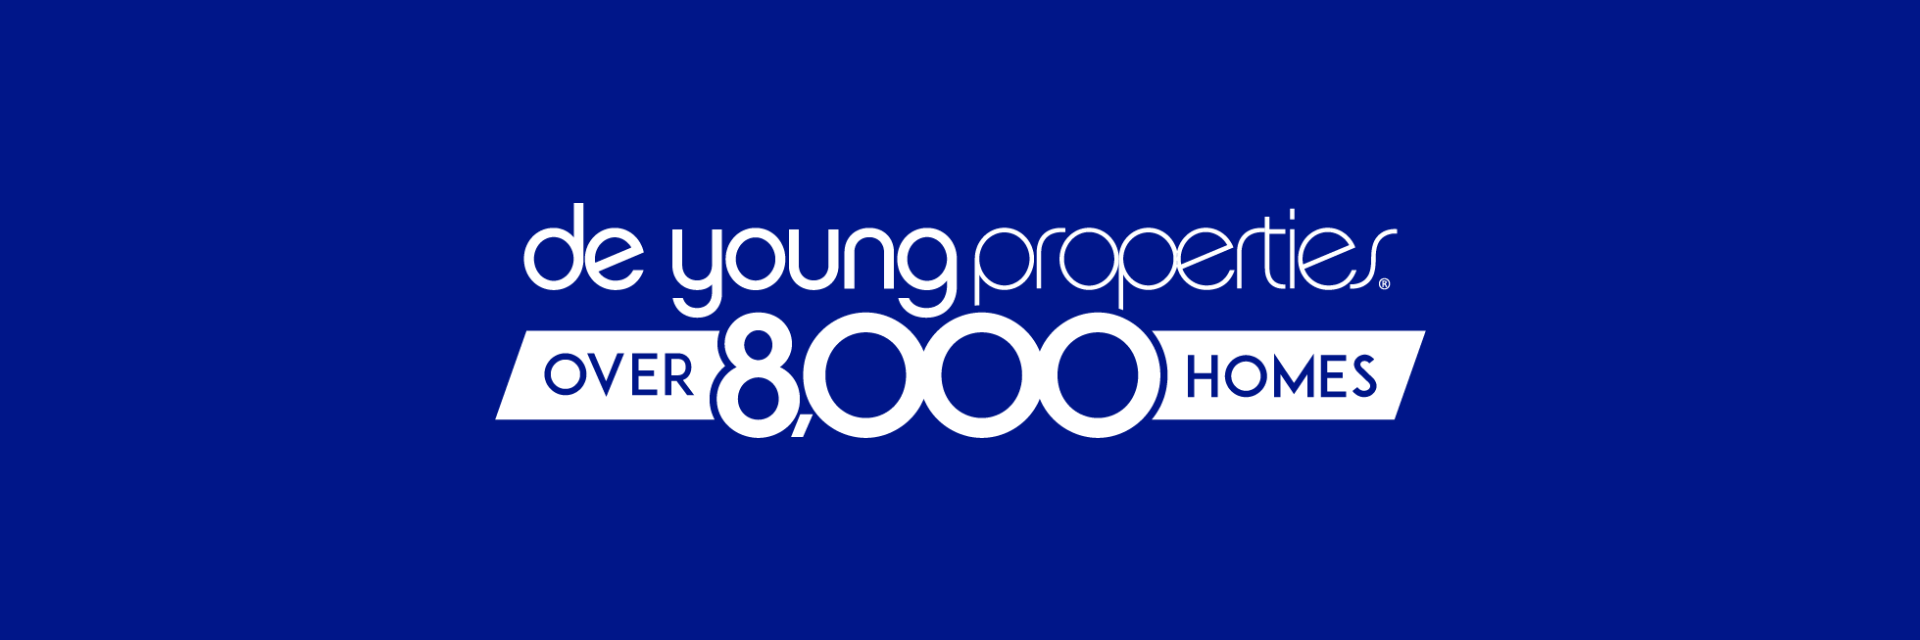 De Young Properties Celebrates 8,000 Homes Milestone